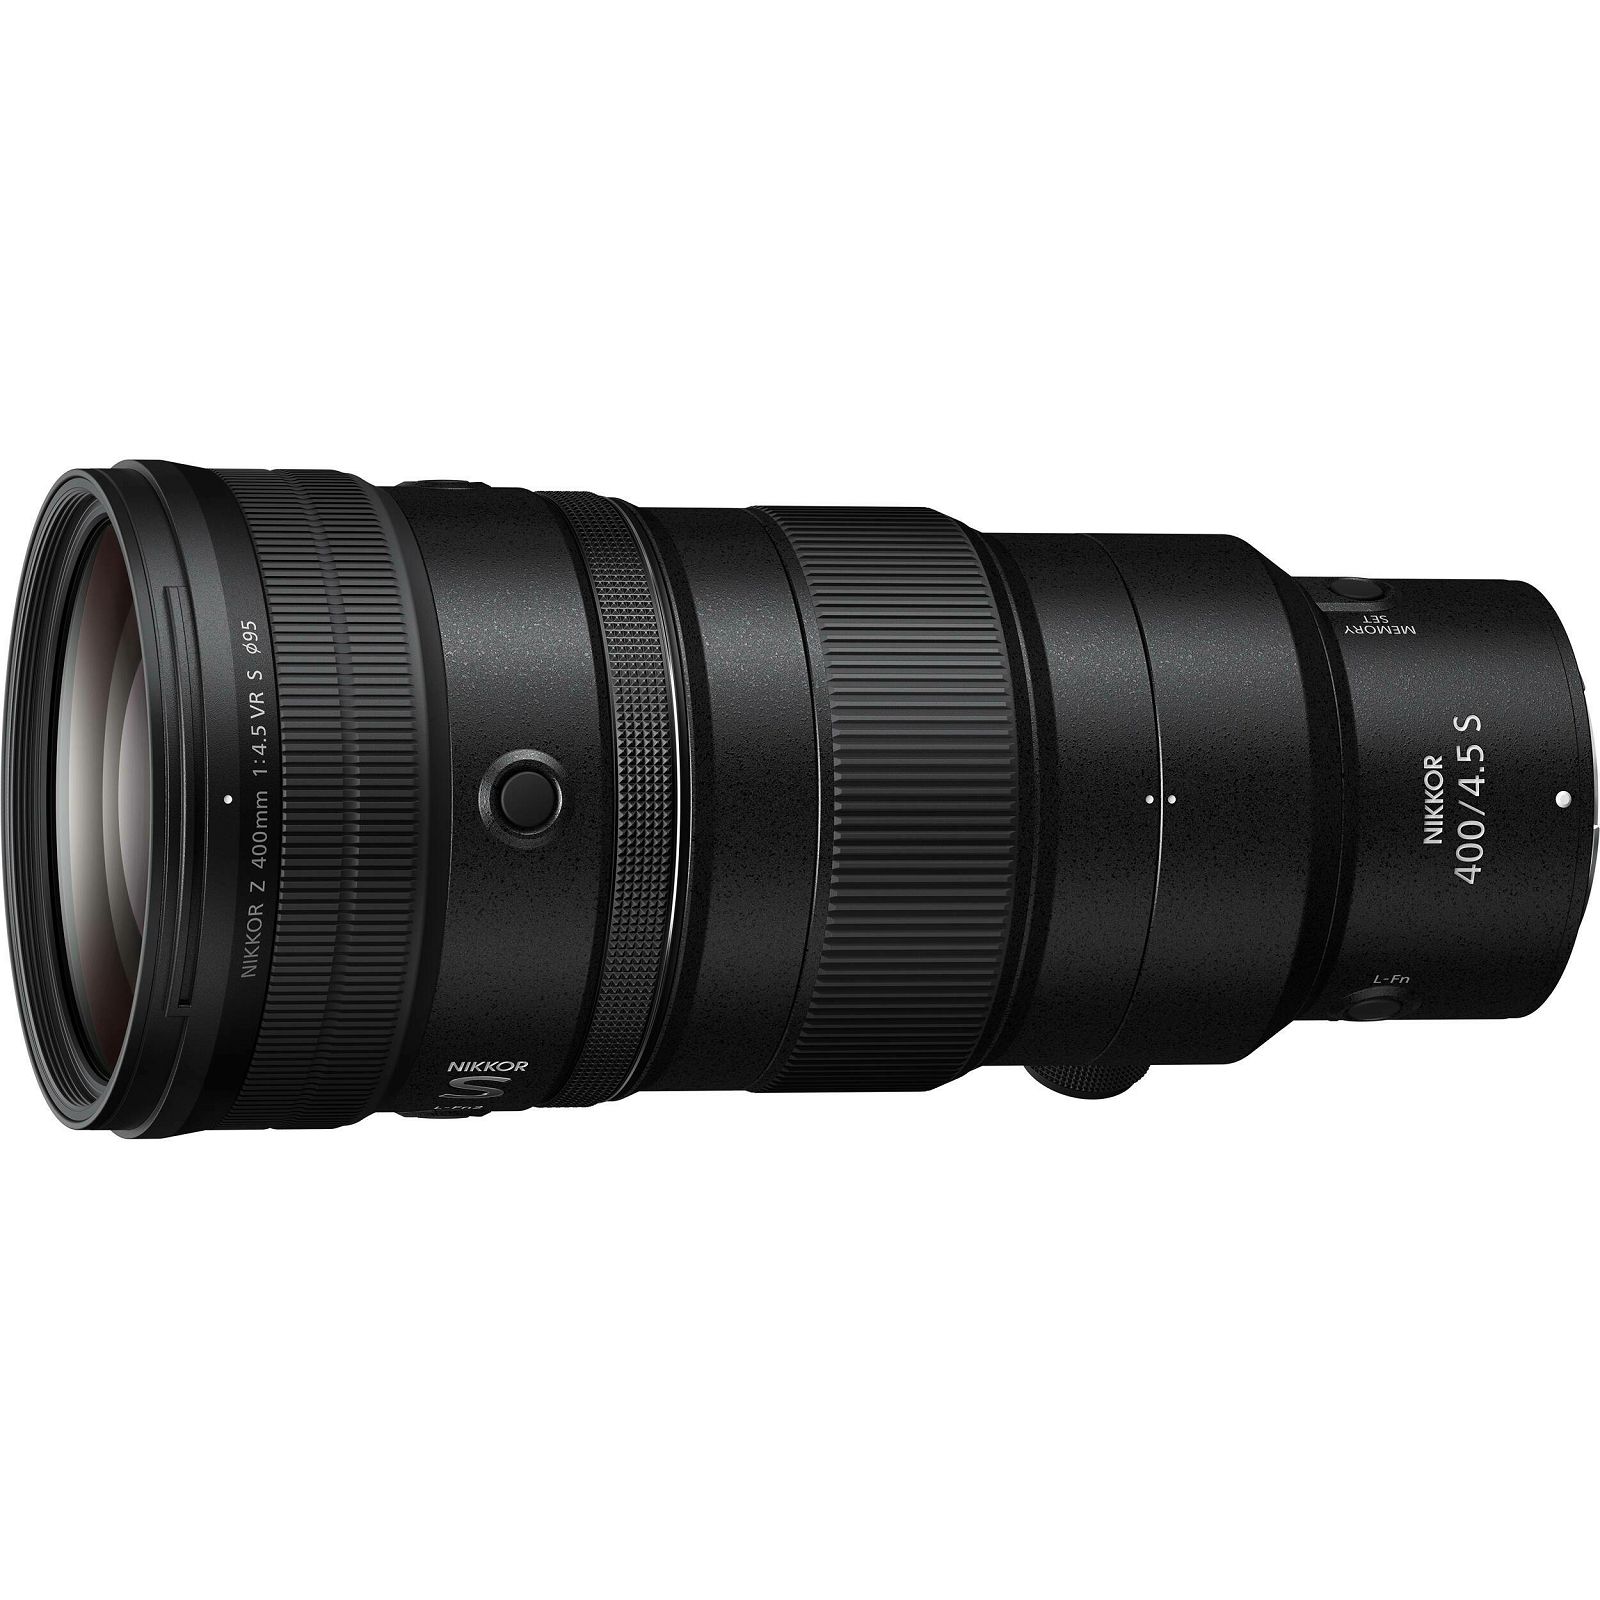 Nikon Z 400mm f/4.5 VR S telefoto objektiv (JMA503DA)